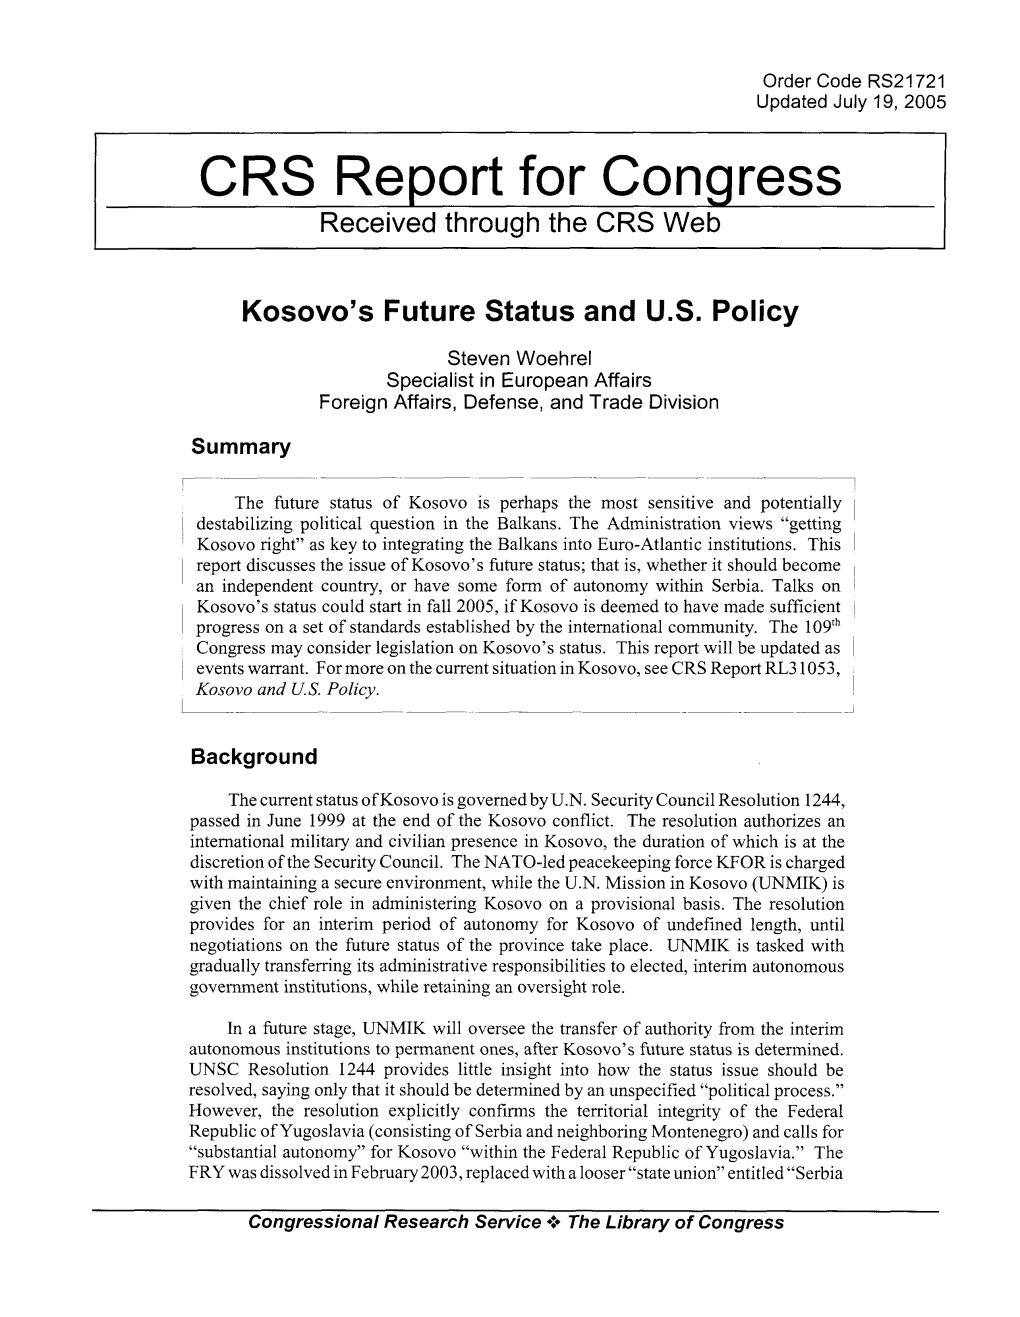 Kosovo's Future Status and US Policy